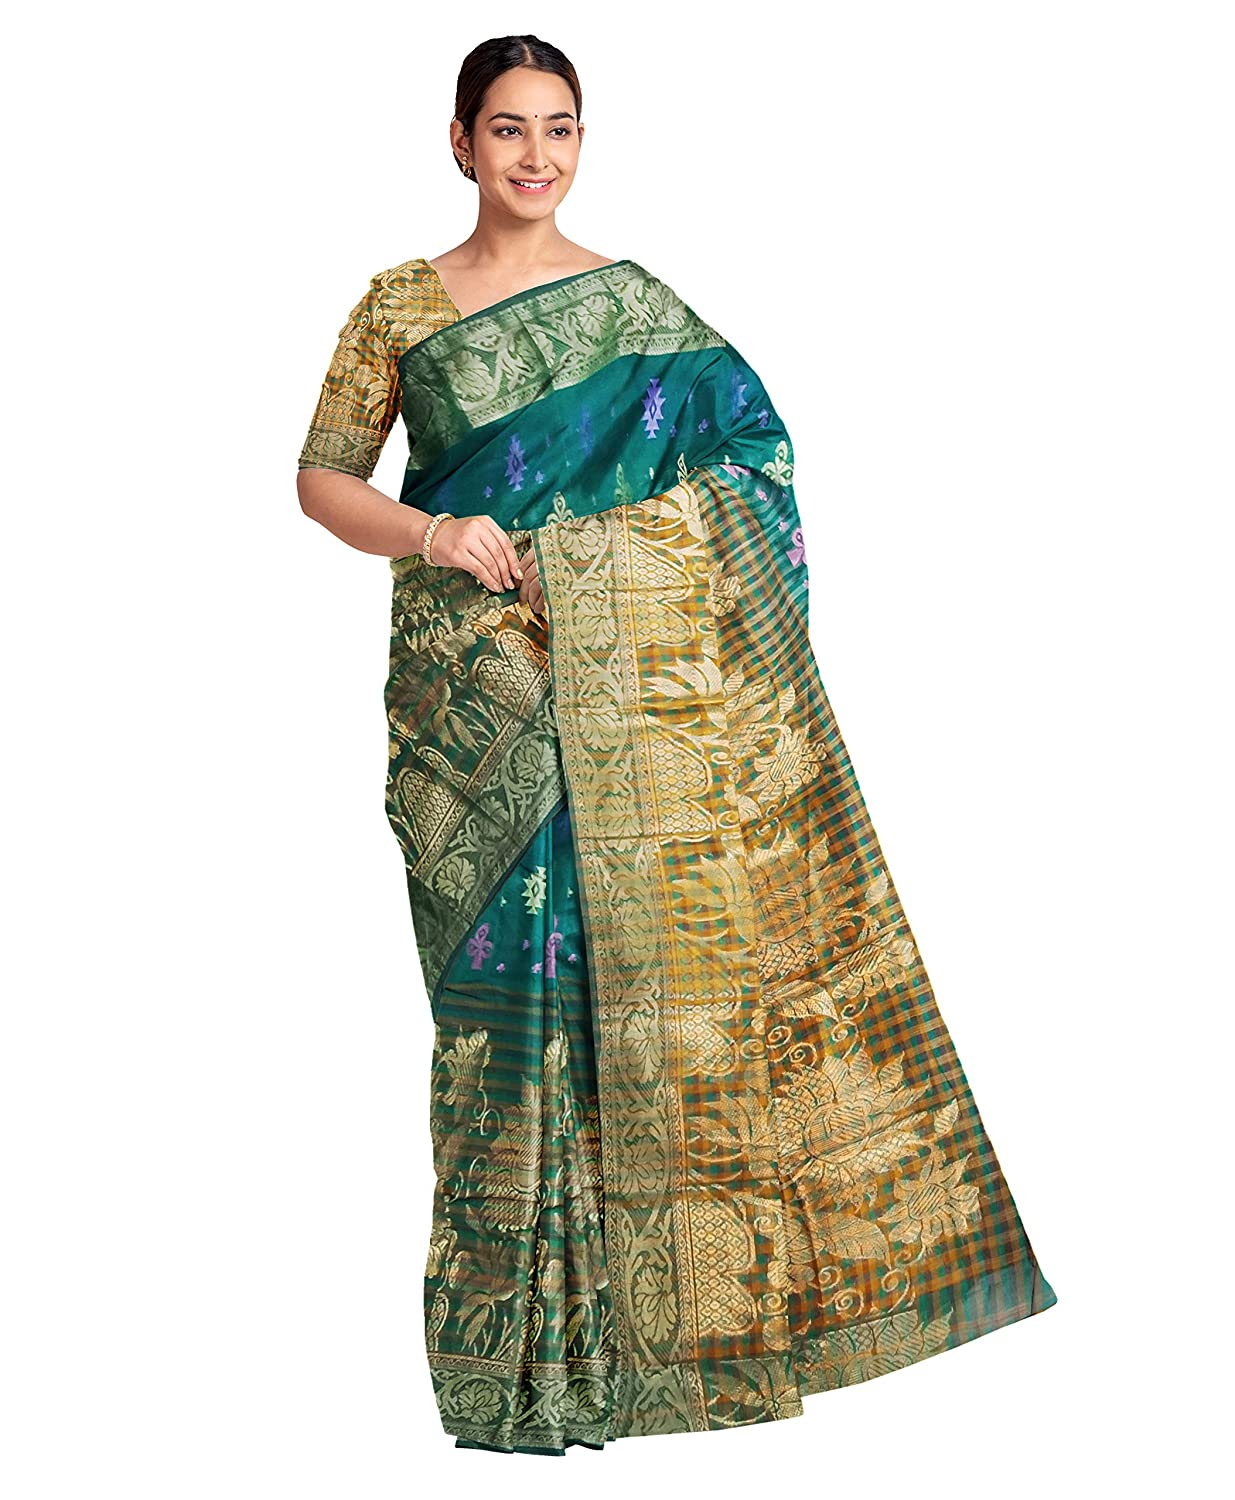 Pradip Fabrics Ethnic Women's and Girl's Teal and Gold color Baluchri saree